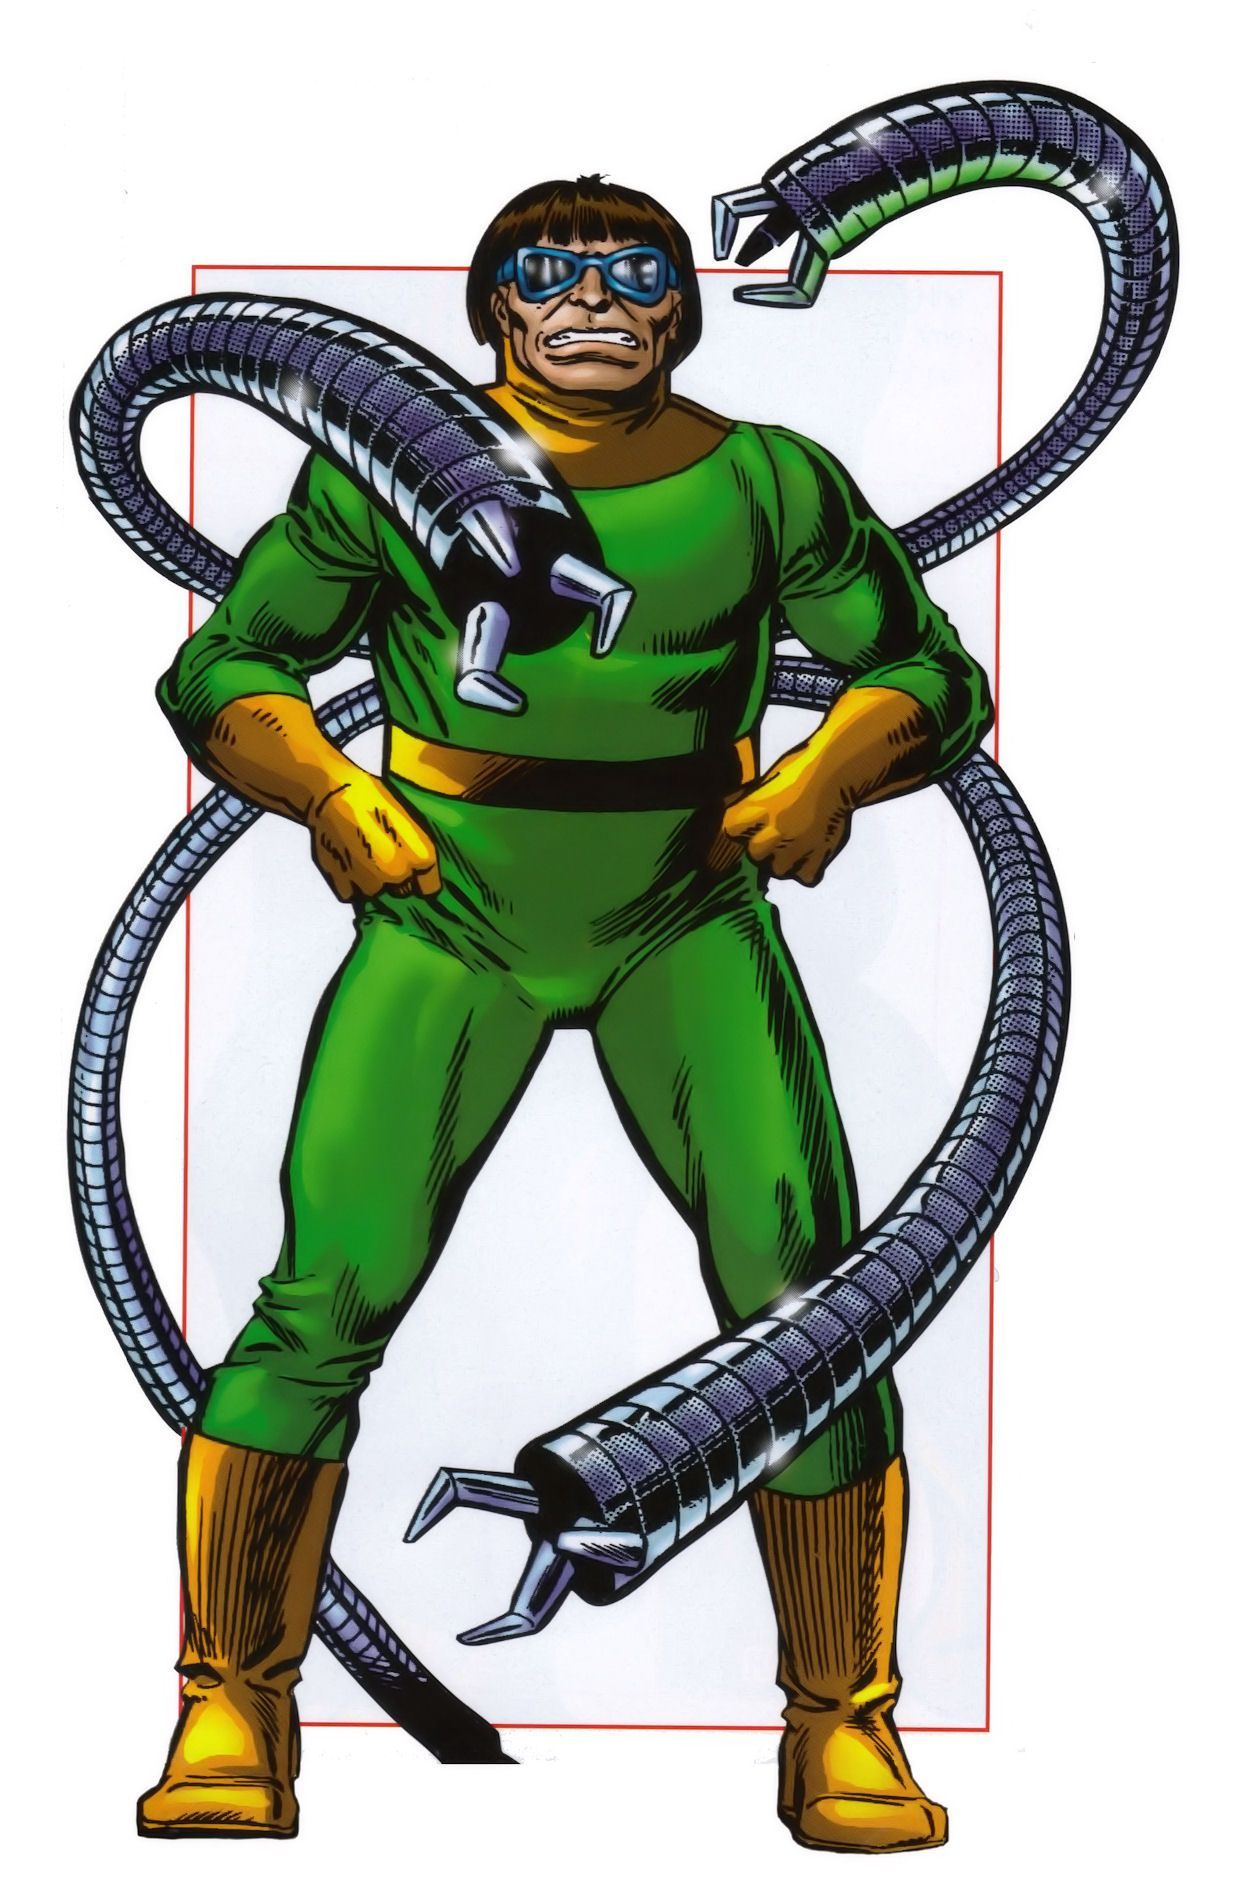 Doctor Octopus (Otto Gunther Octavius). Superhero comic, Marvel comic character, Marvel superheroes